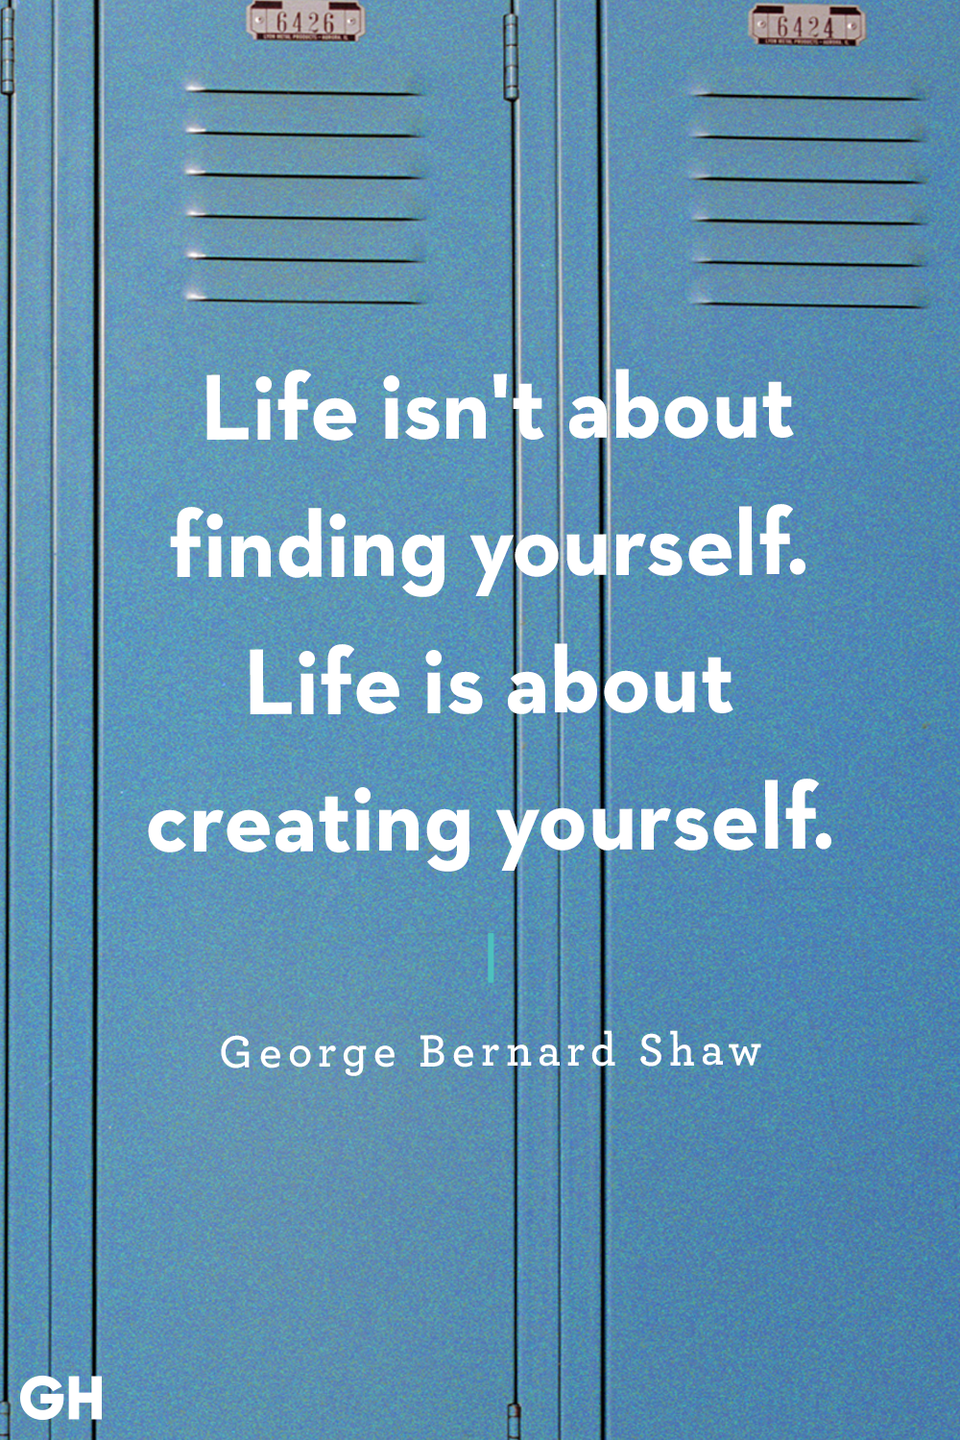 7) George Bernard Shaw